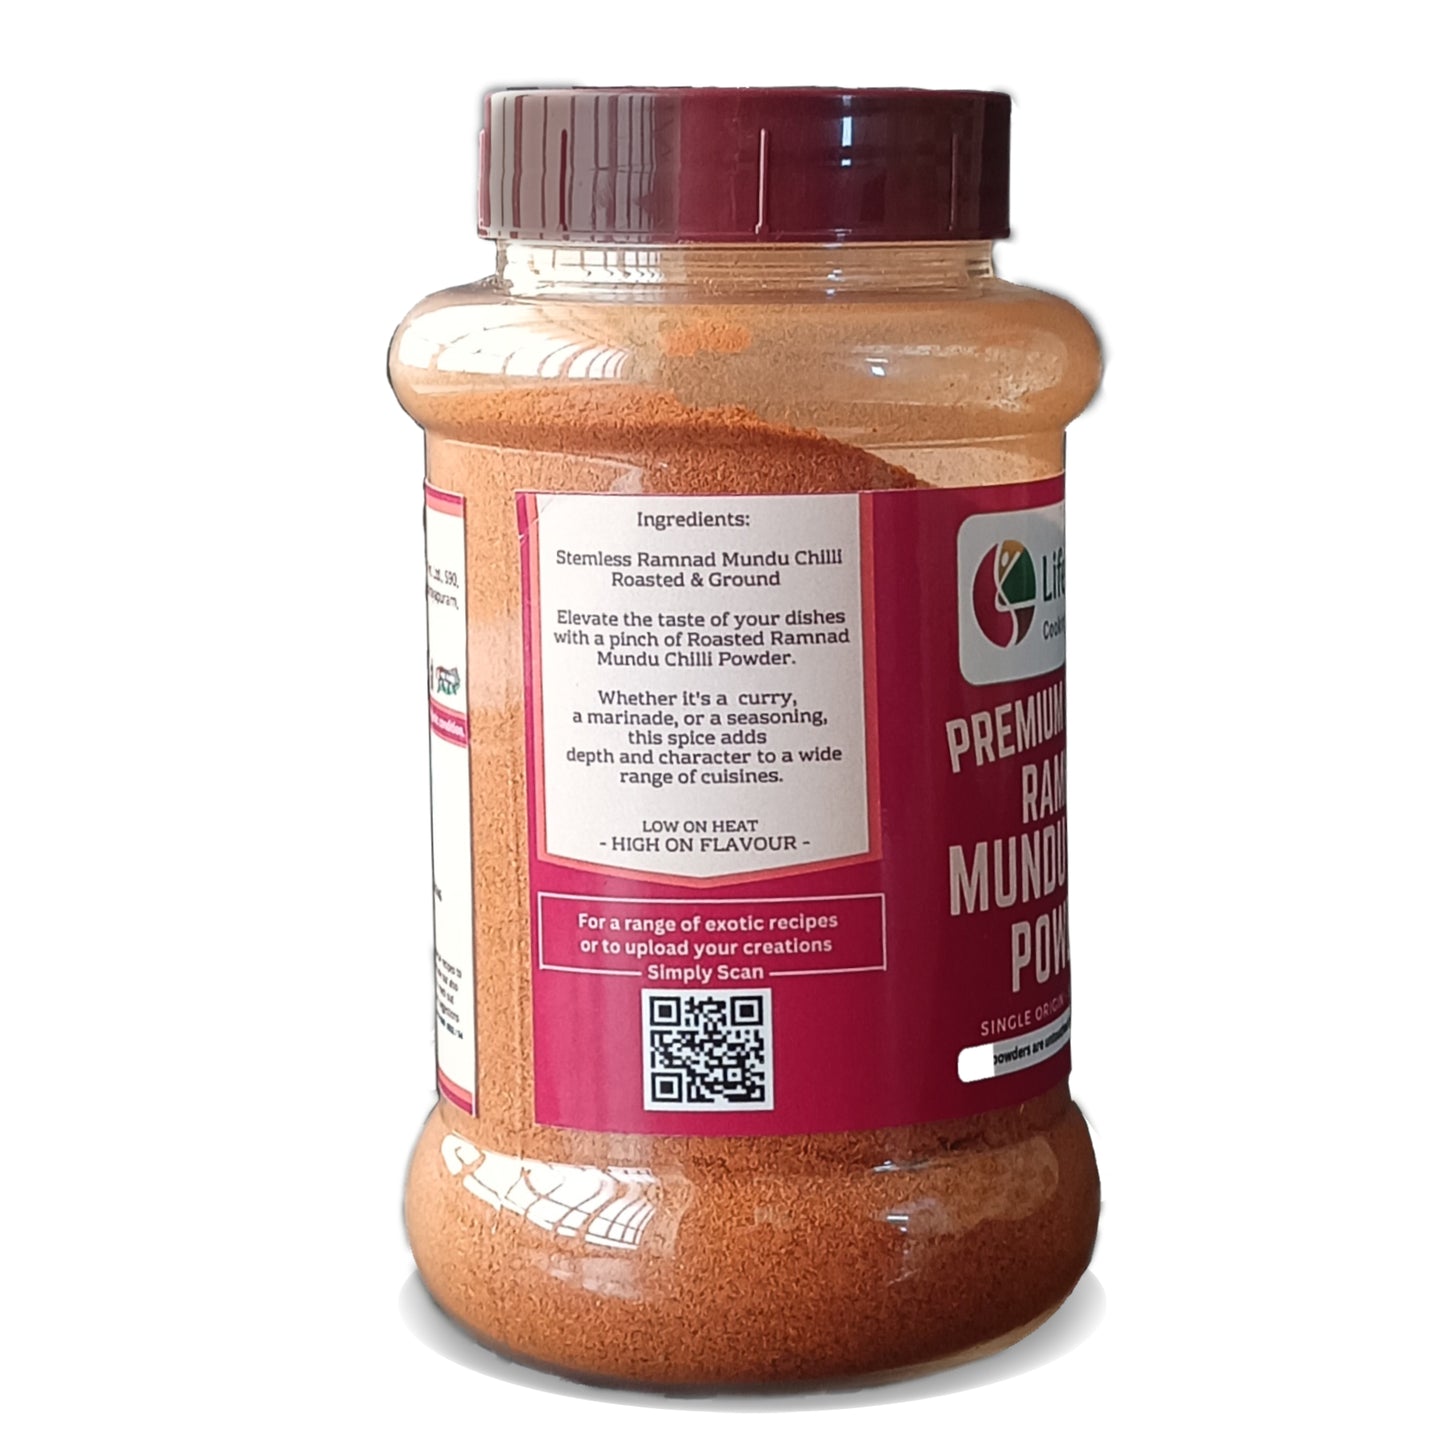 Lifespice - Ramnad Mundu Chilli Powder 200g PET Jar (Premium Roasted)